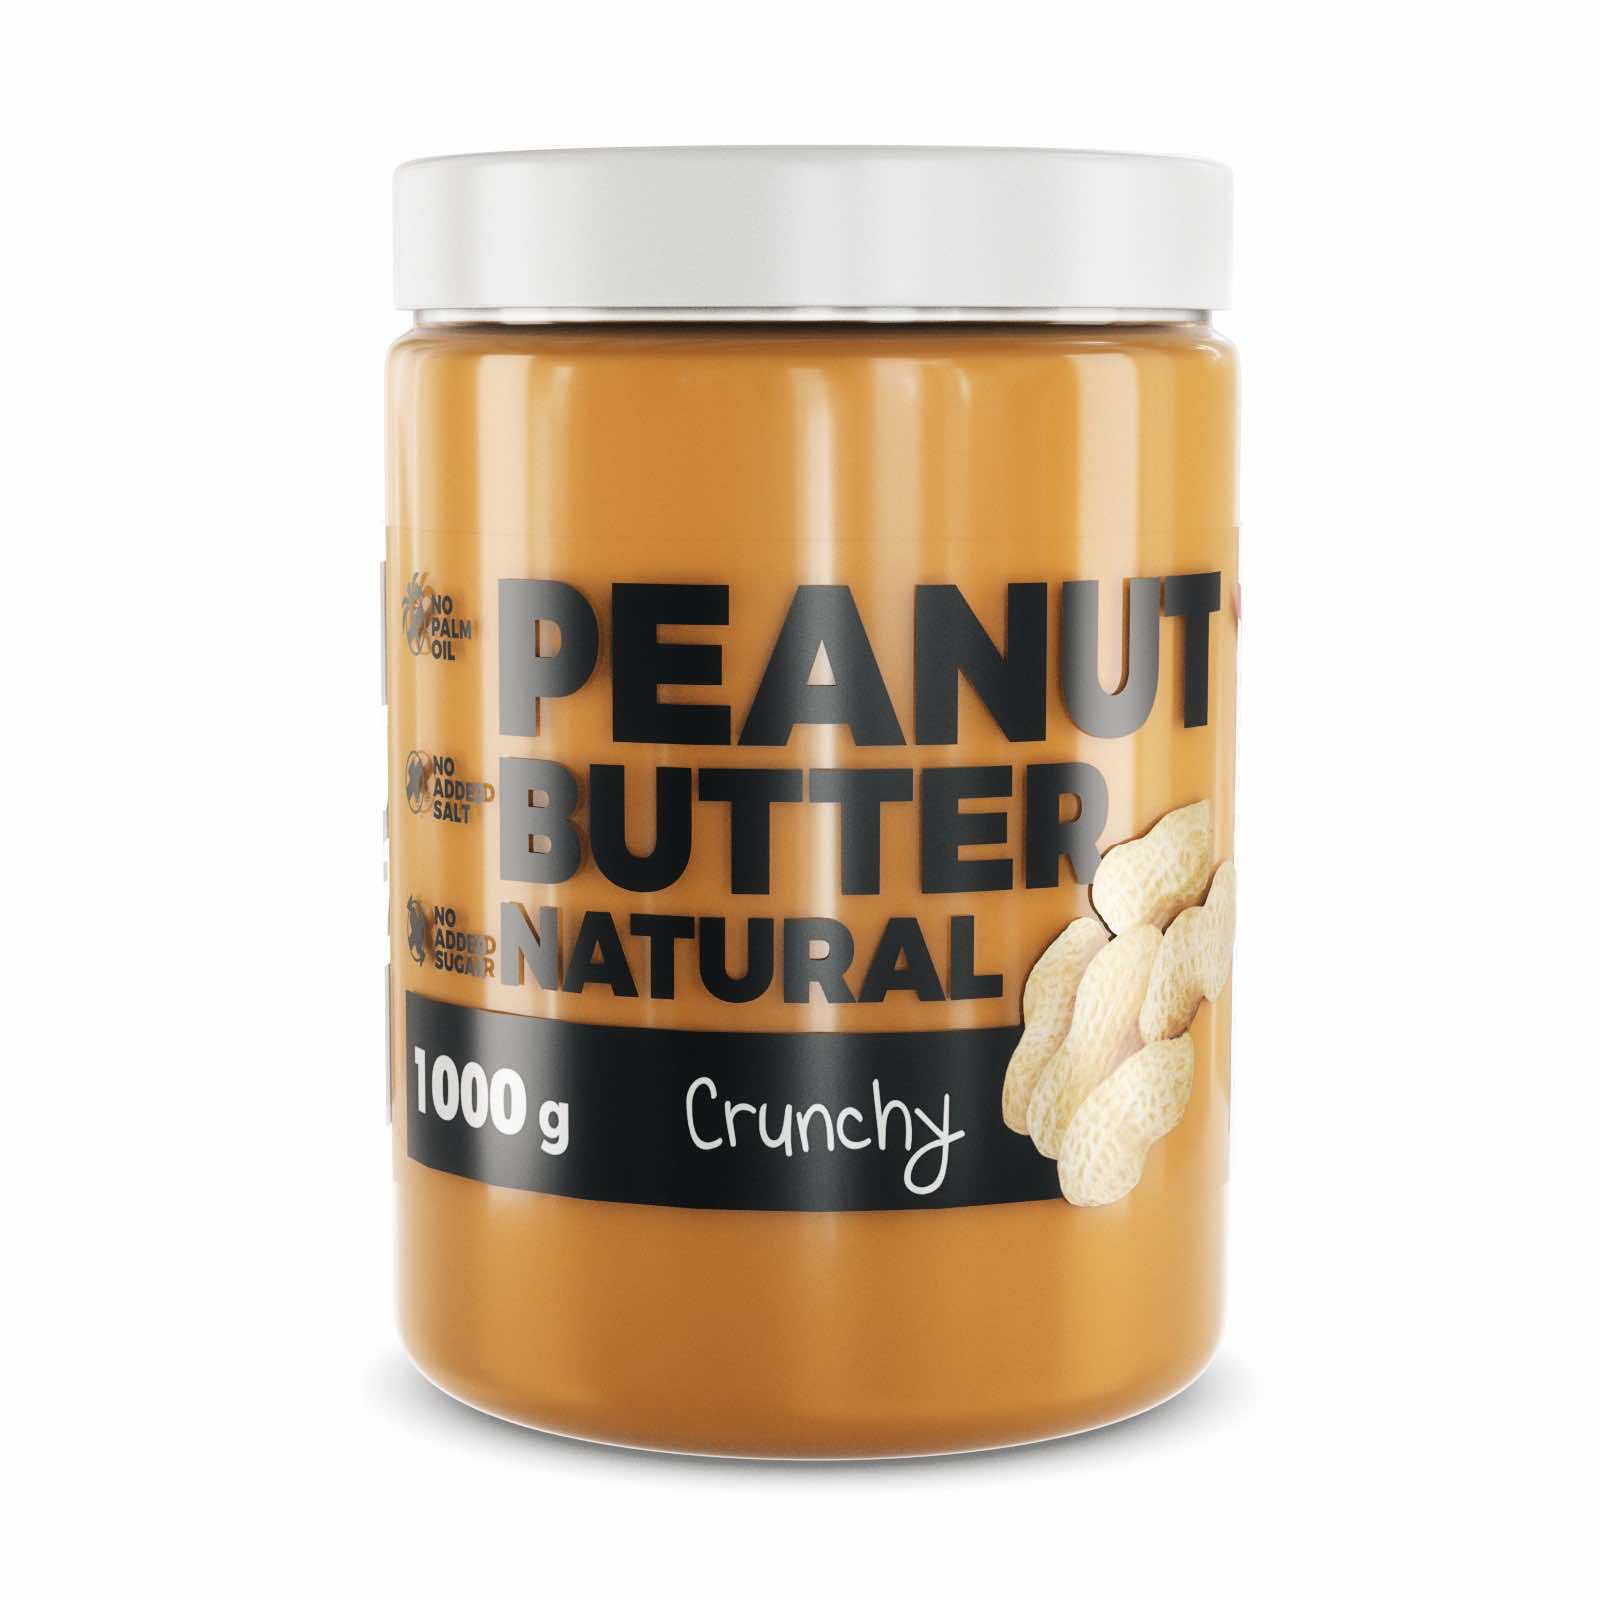 7nutrition peanut butter crunchy 1000g